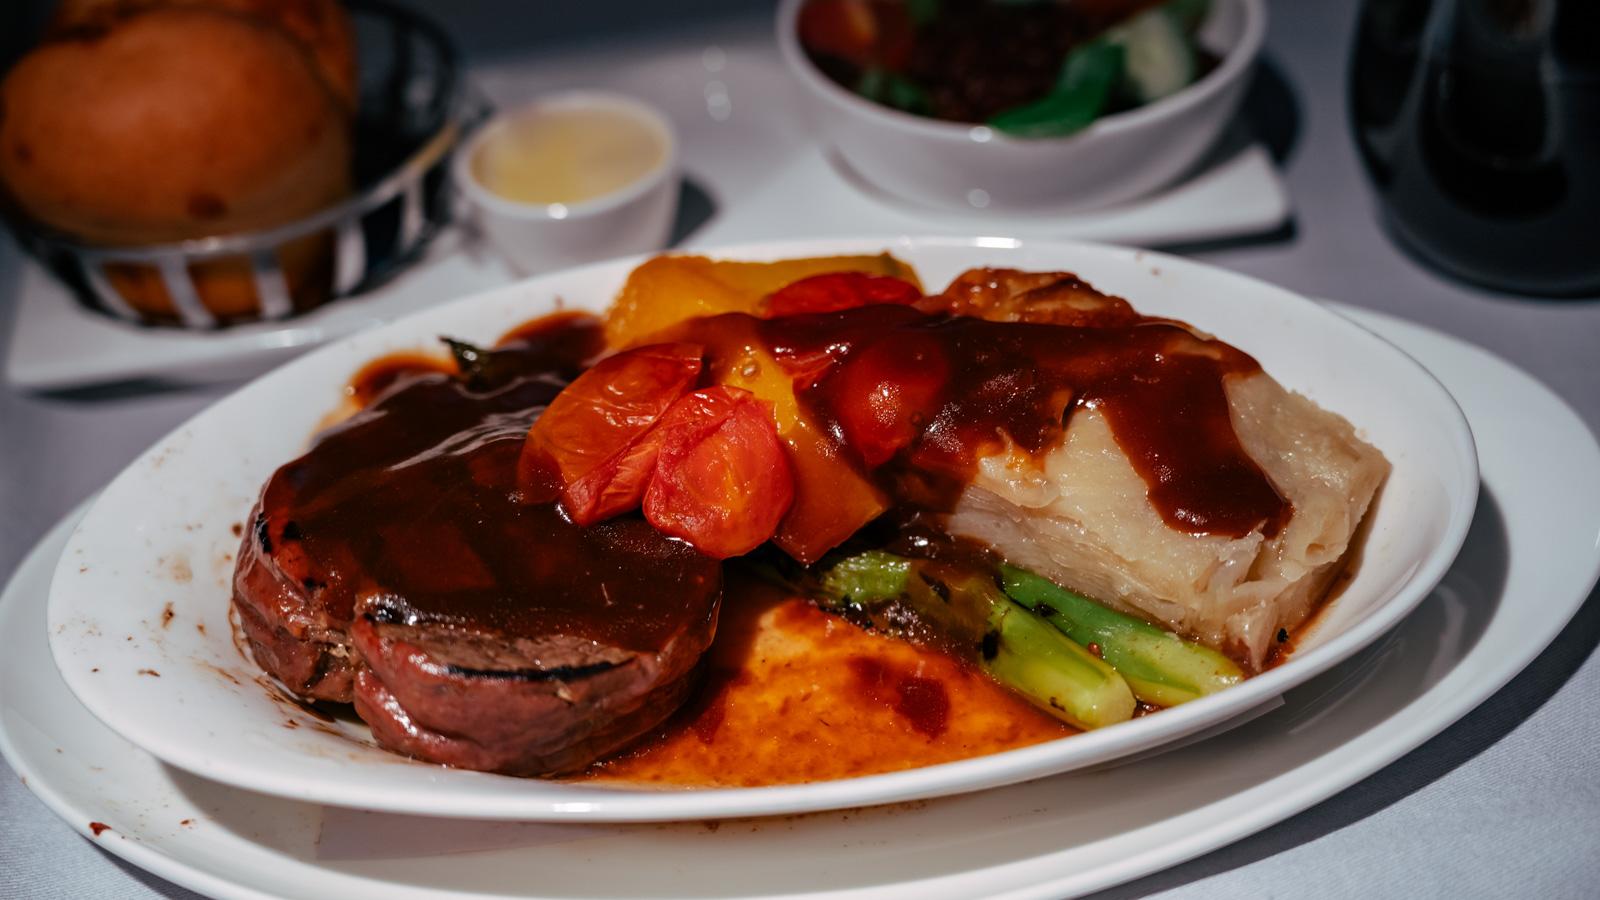 British Airways Club Suites steak